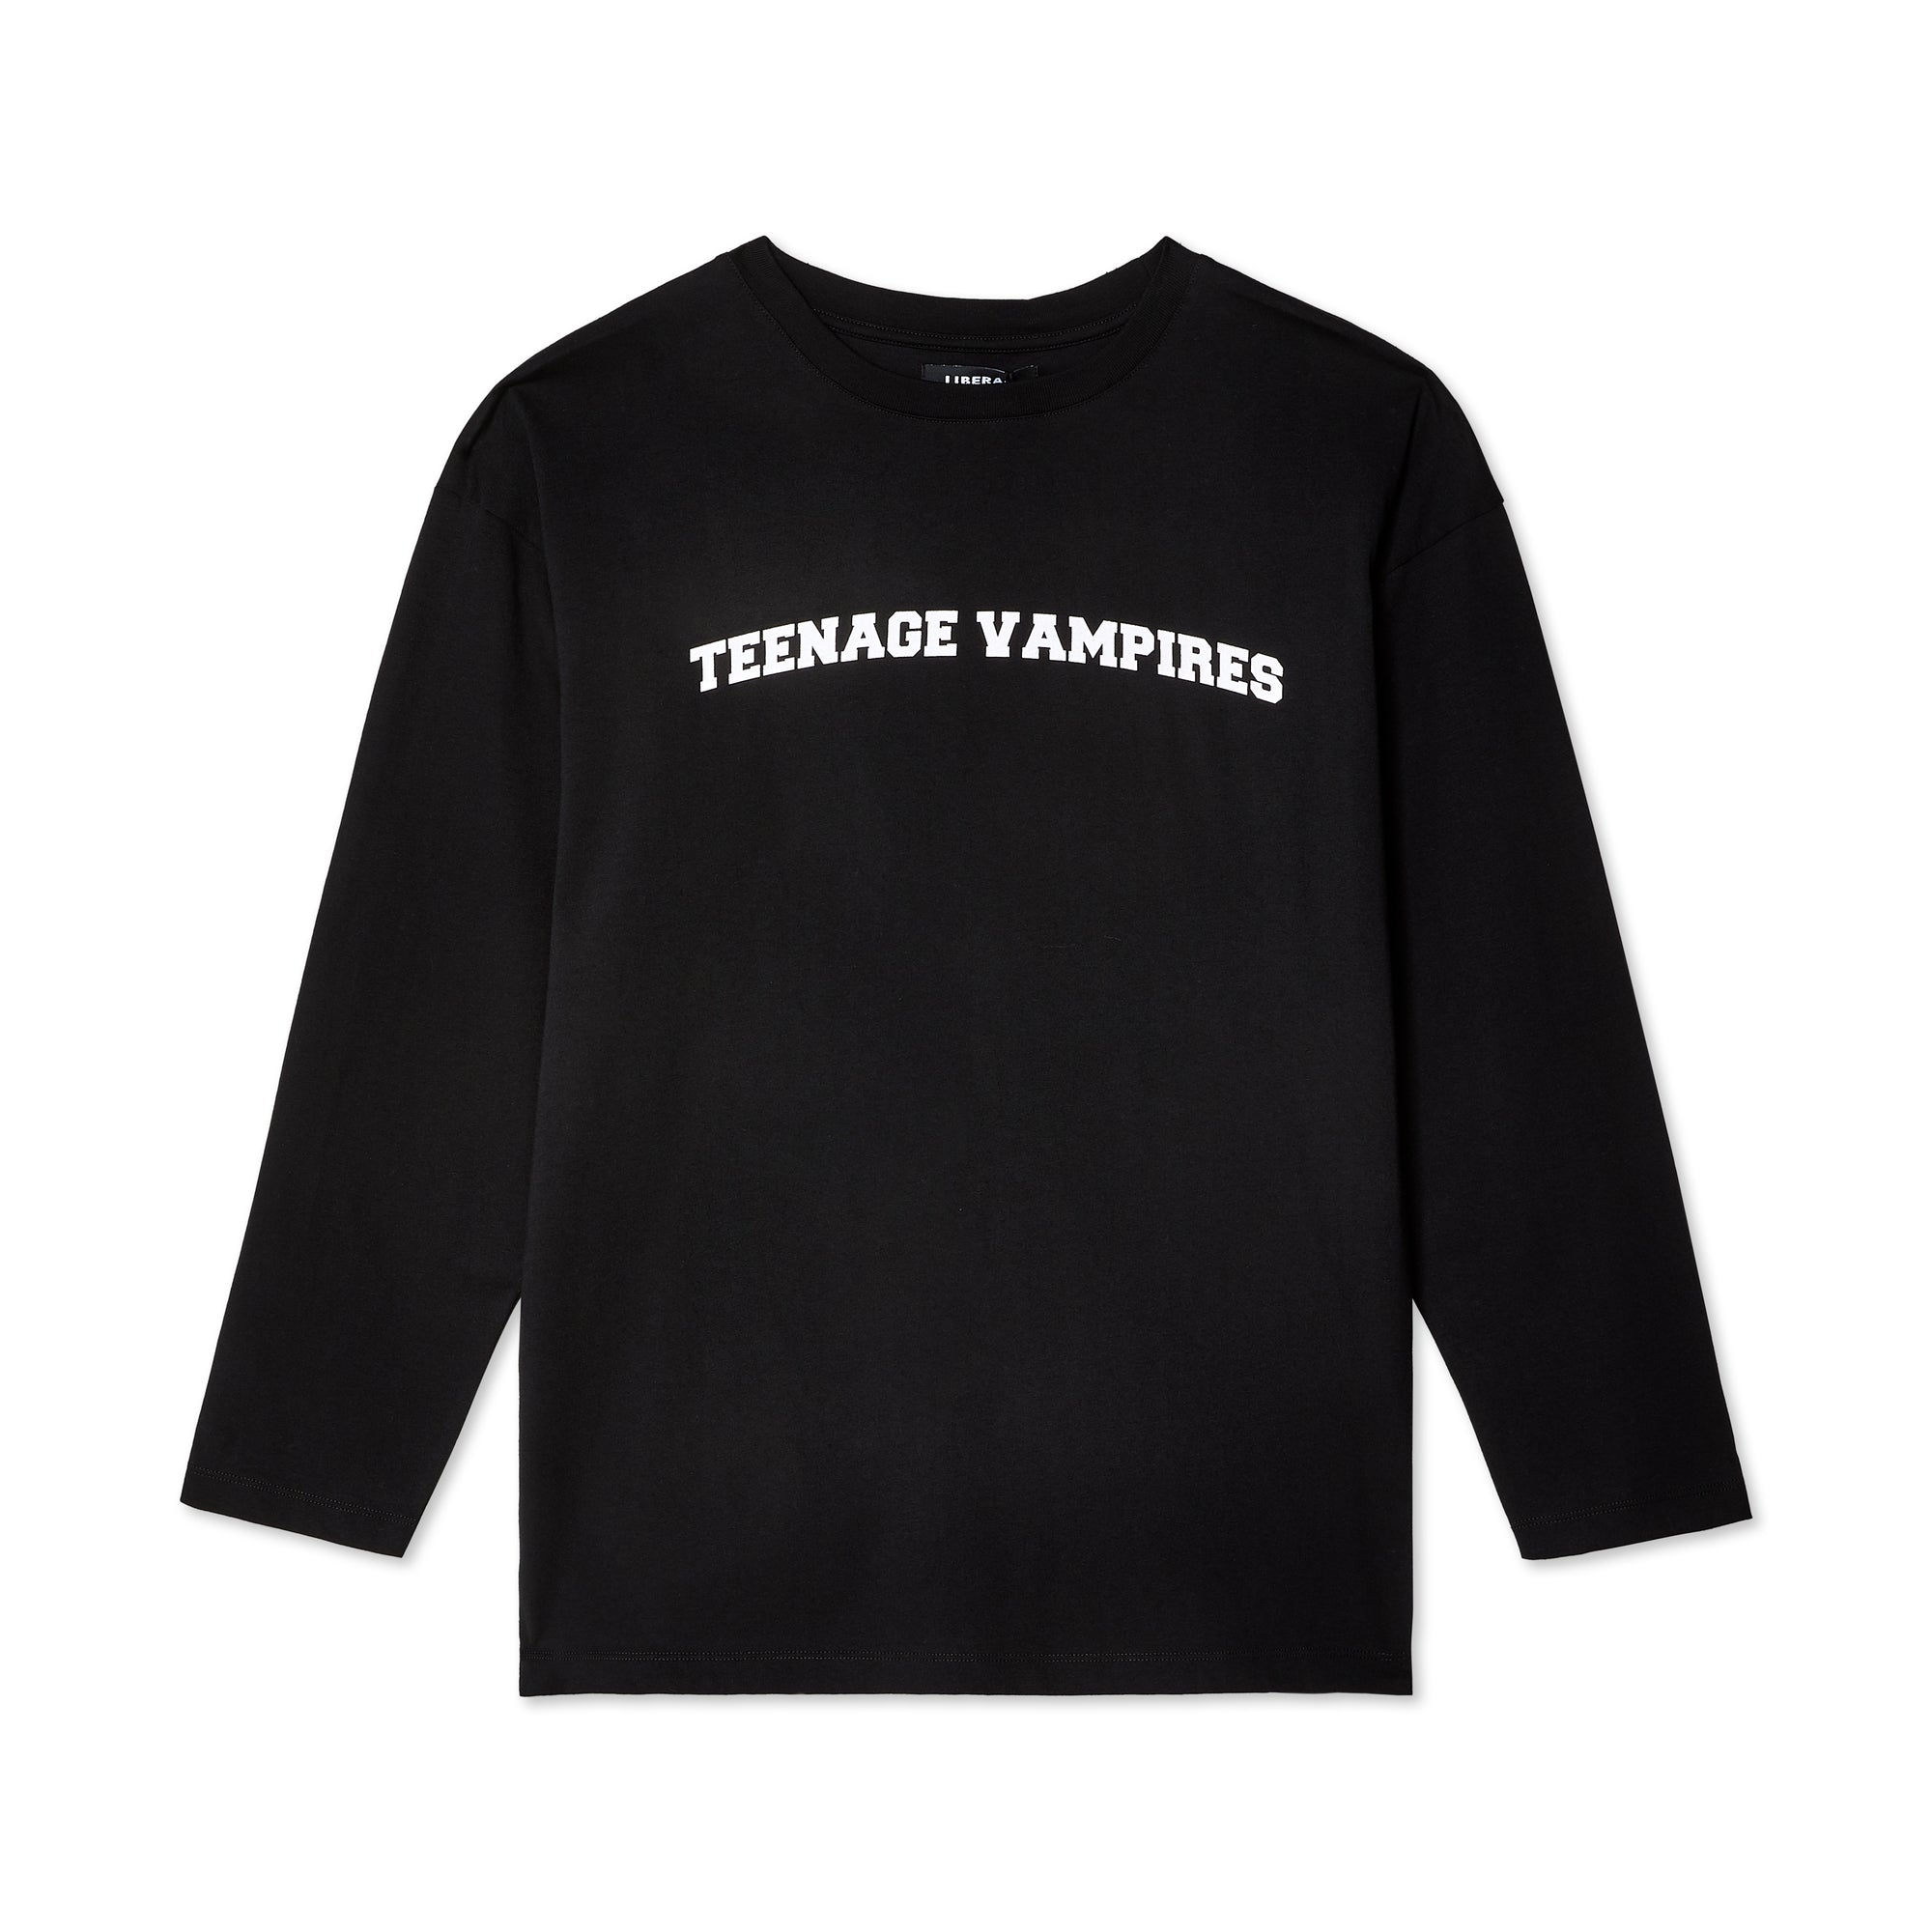 Liberal Youth Ministry - Men's Teenage Vampires T-Shirt - (Black) view 1